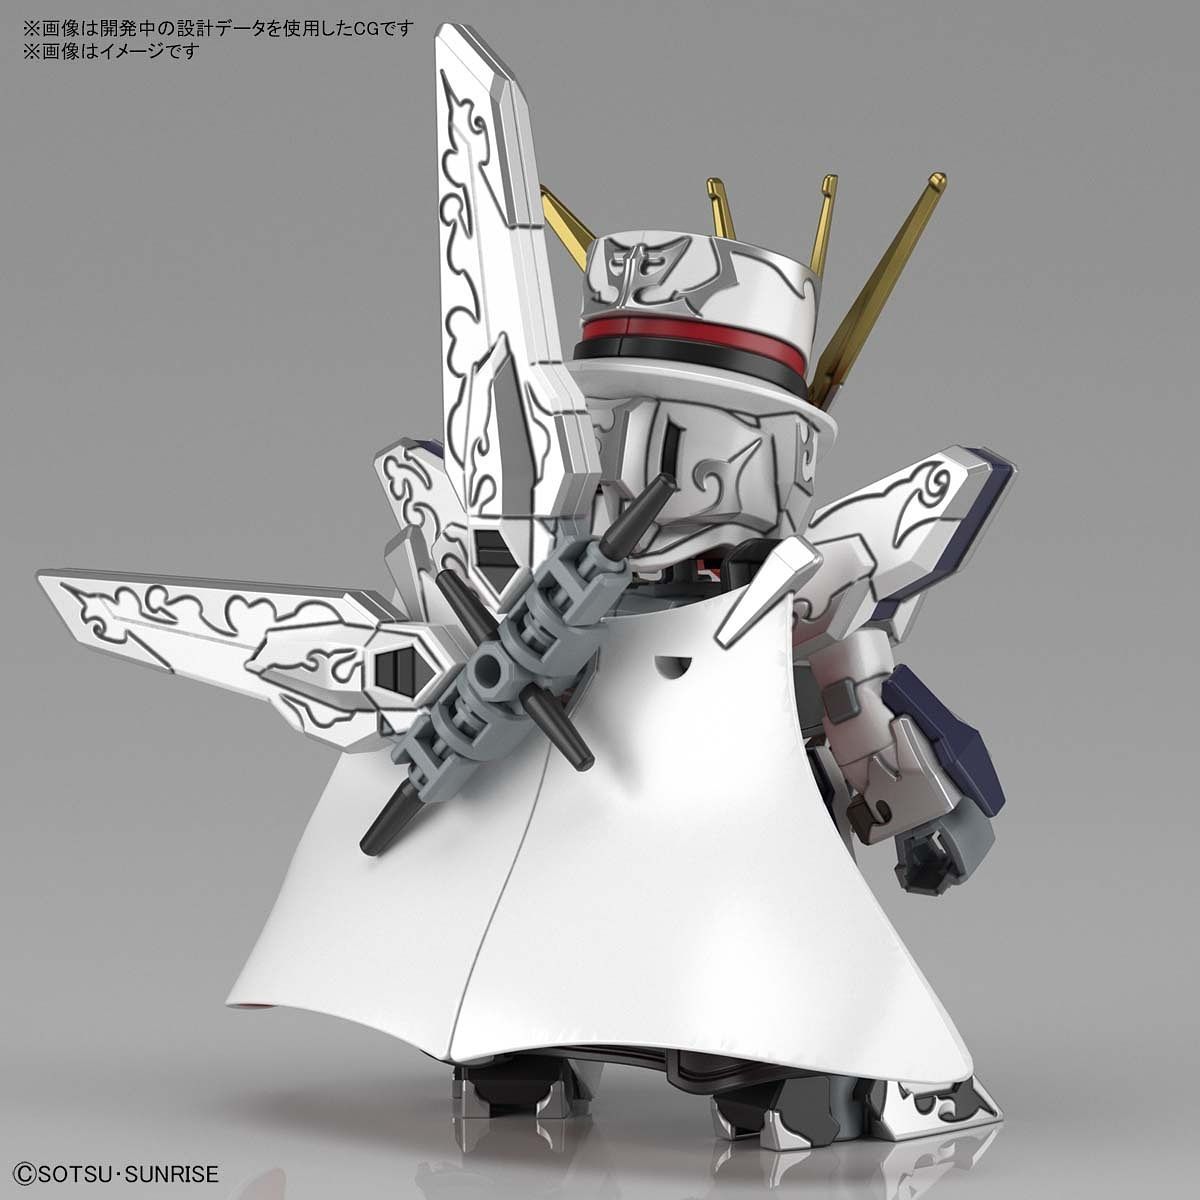 SDW Heroes - #10 Arsene Gundam X